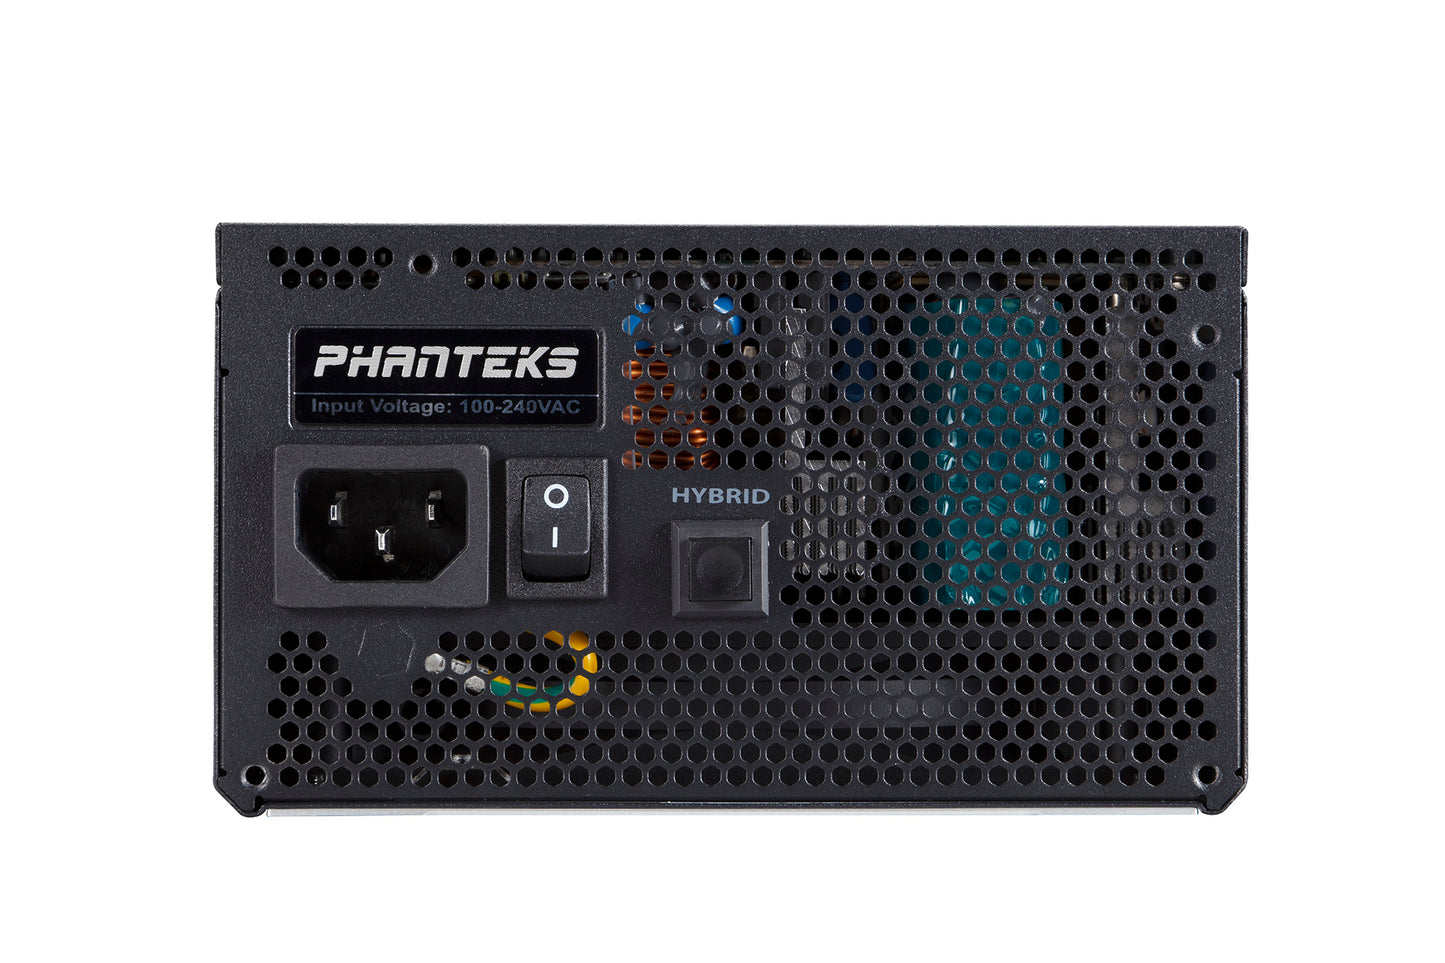 Phanteks 80+ Platinum - Built-in Power Splitter 1200W Fully Modular Design Dual System Support Power Supply (PH-P1200PS)